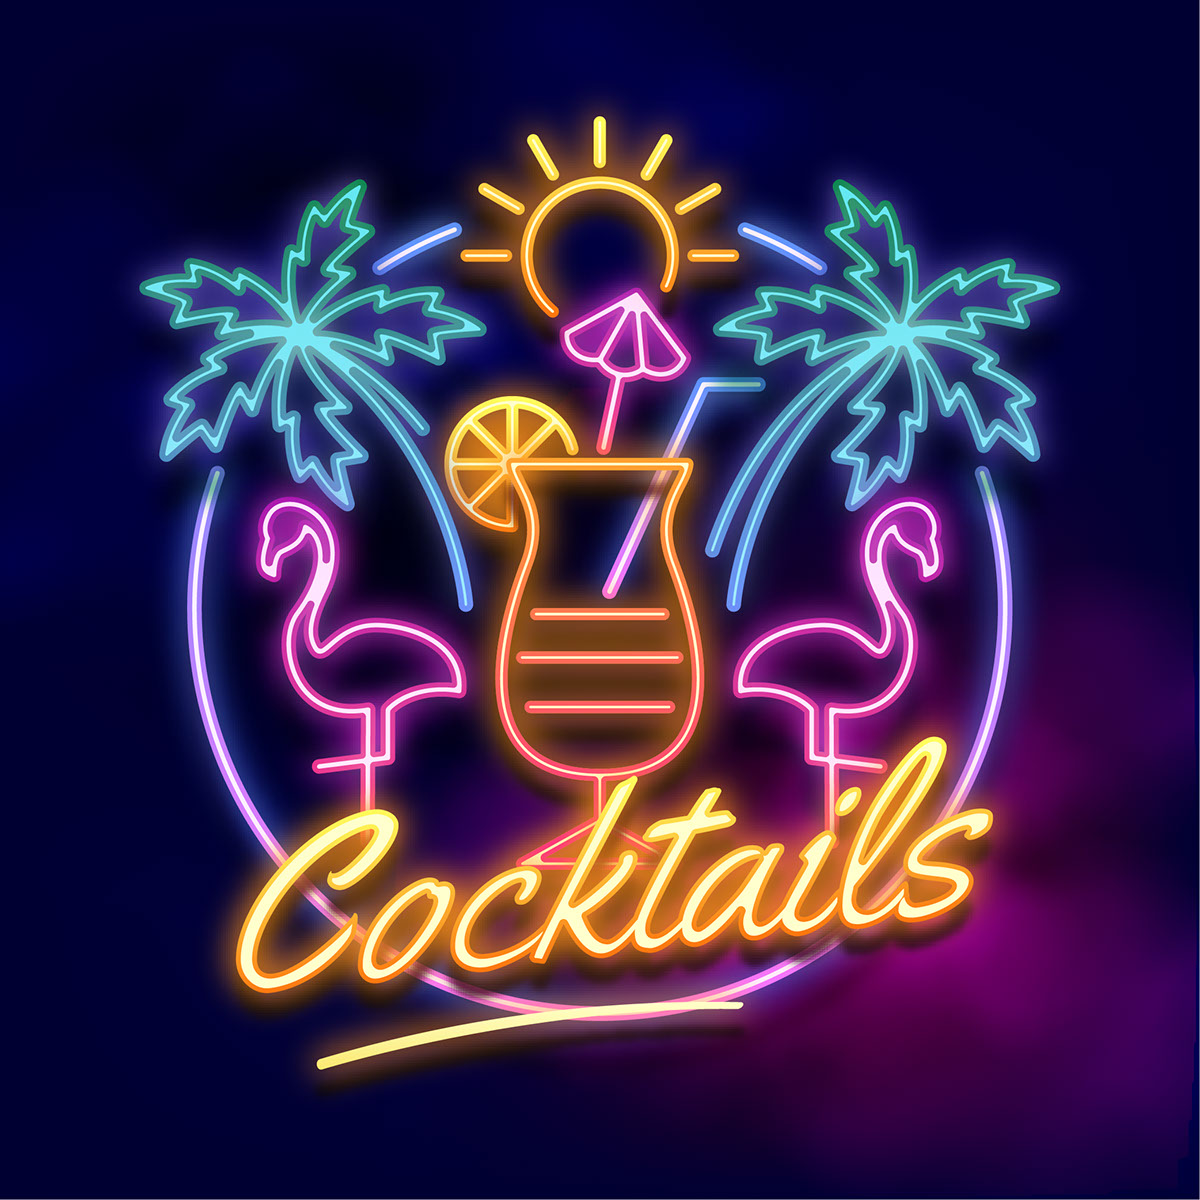 Cocktails rendition image